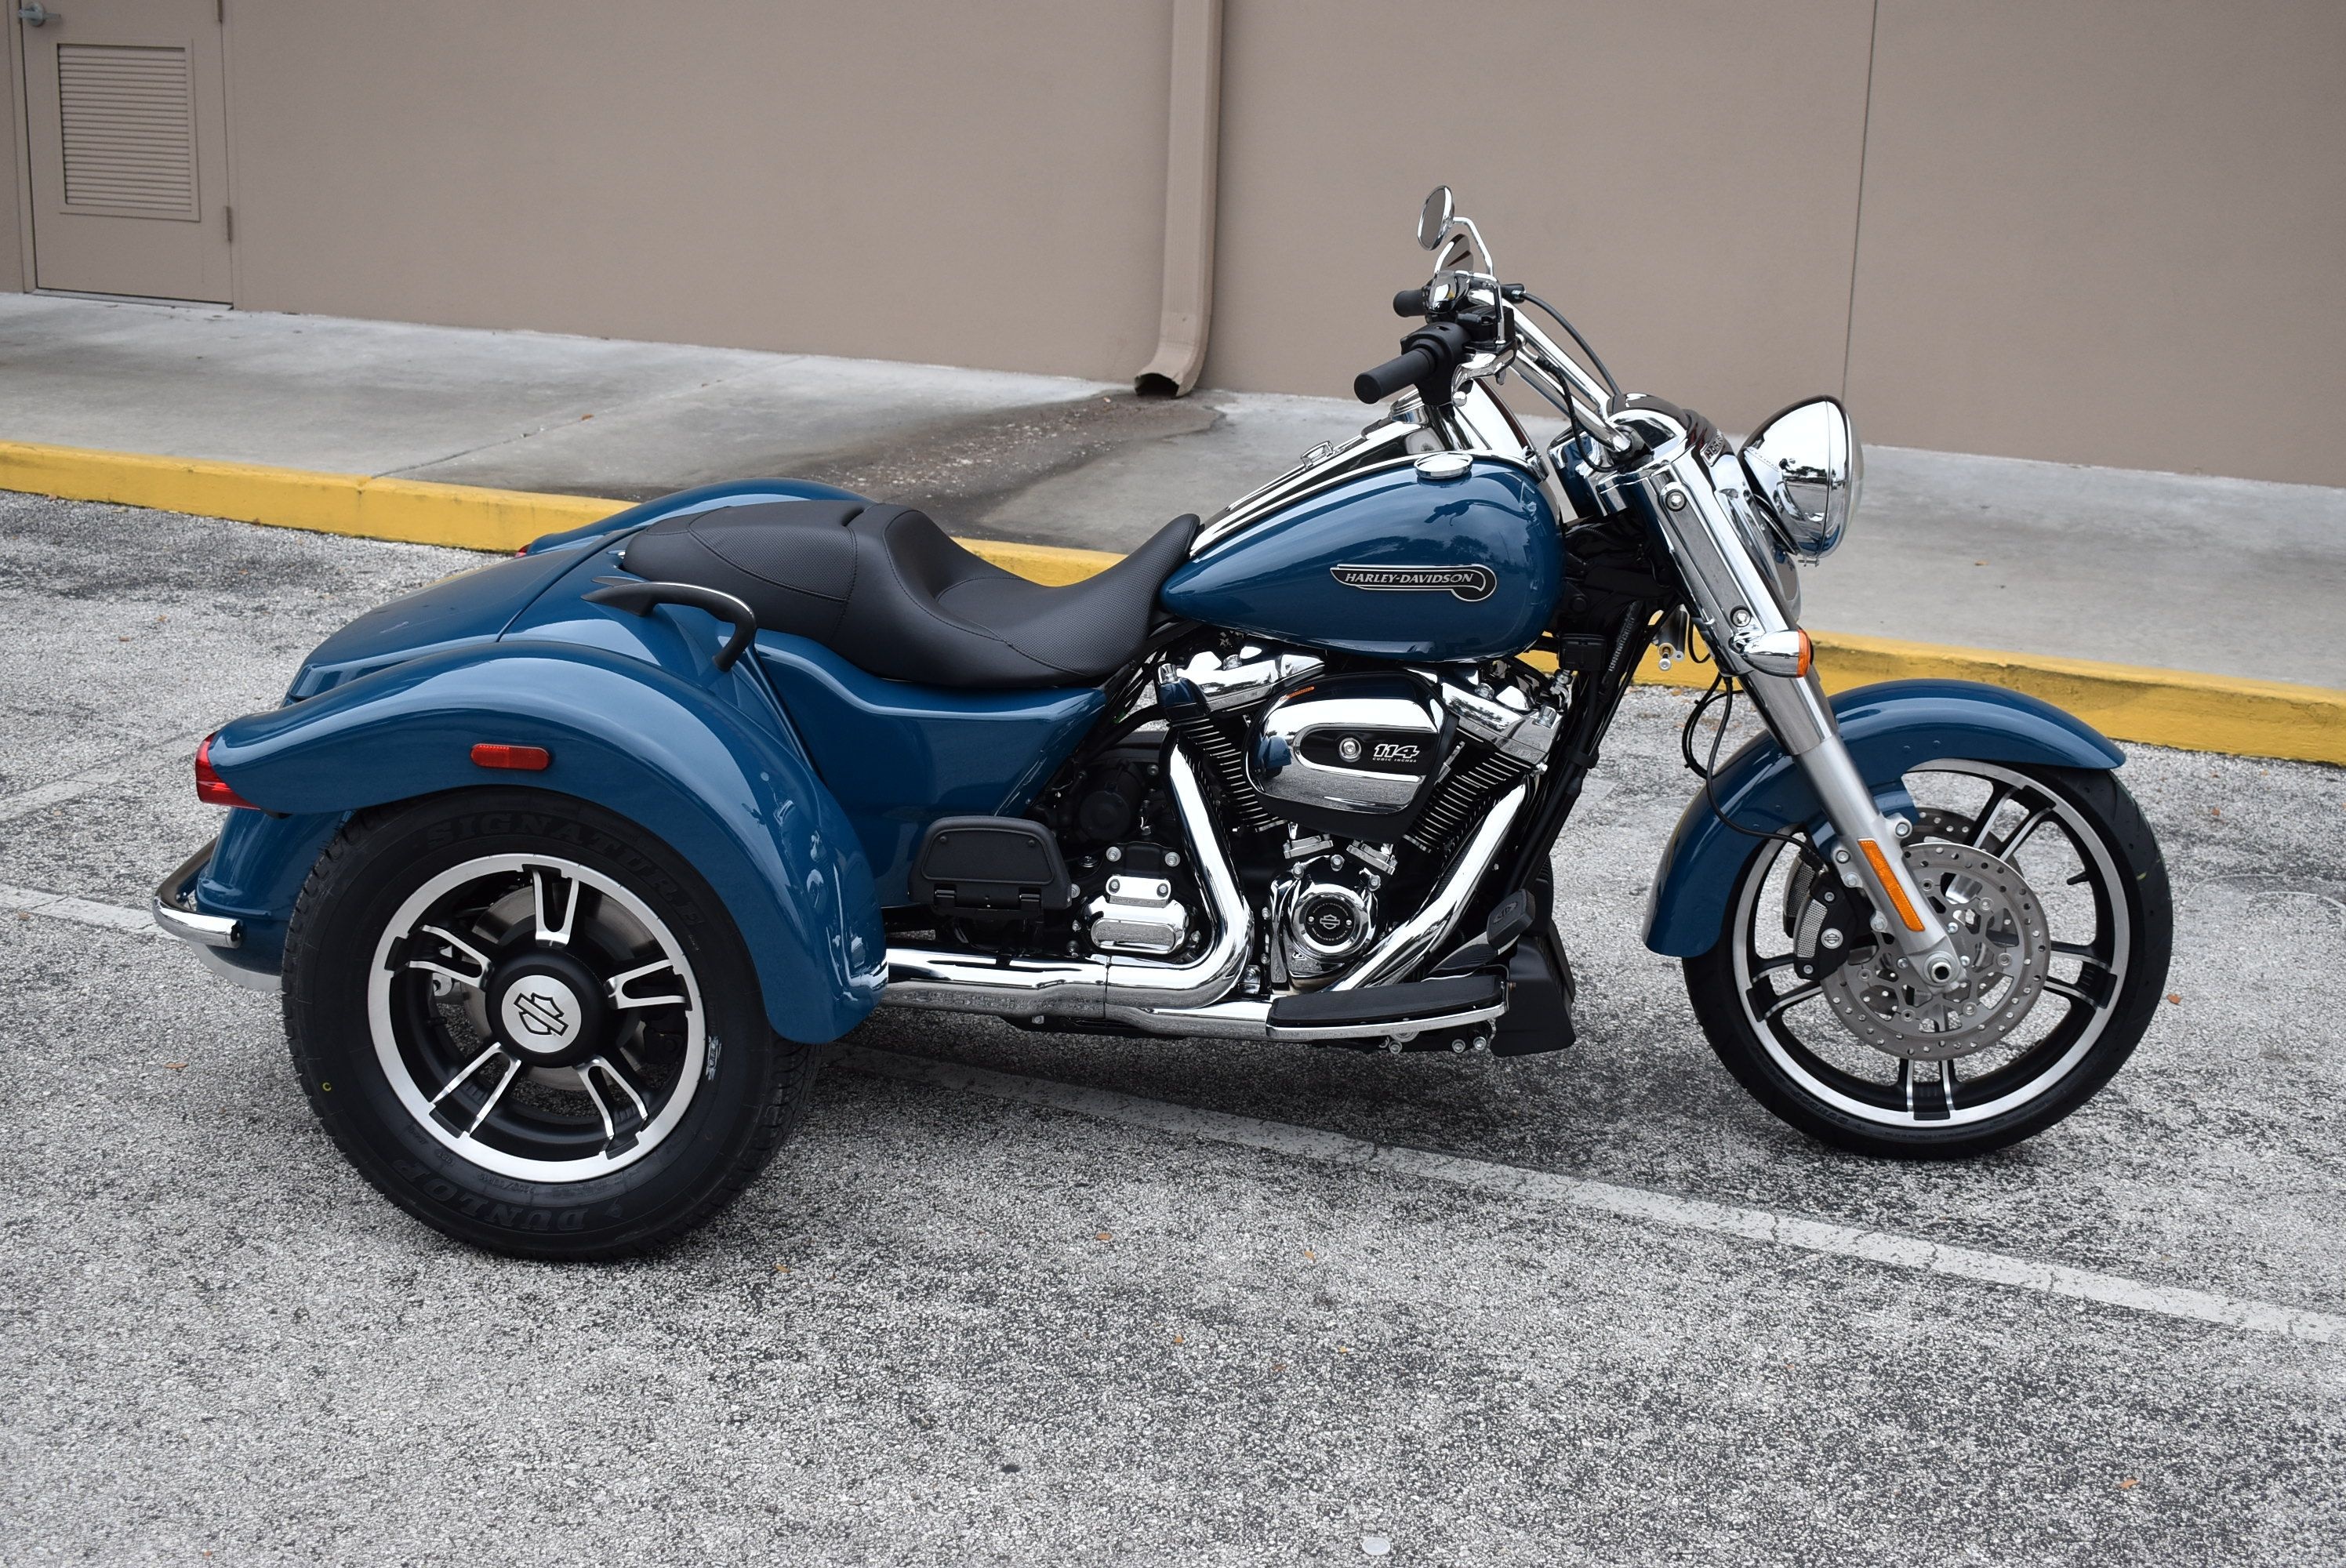 Harley-Davidson Freewheeler, Trike motorcycle, Used sale, Discounted price, 3000x2000 HD Desktop